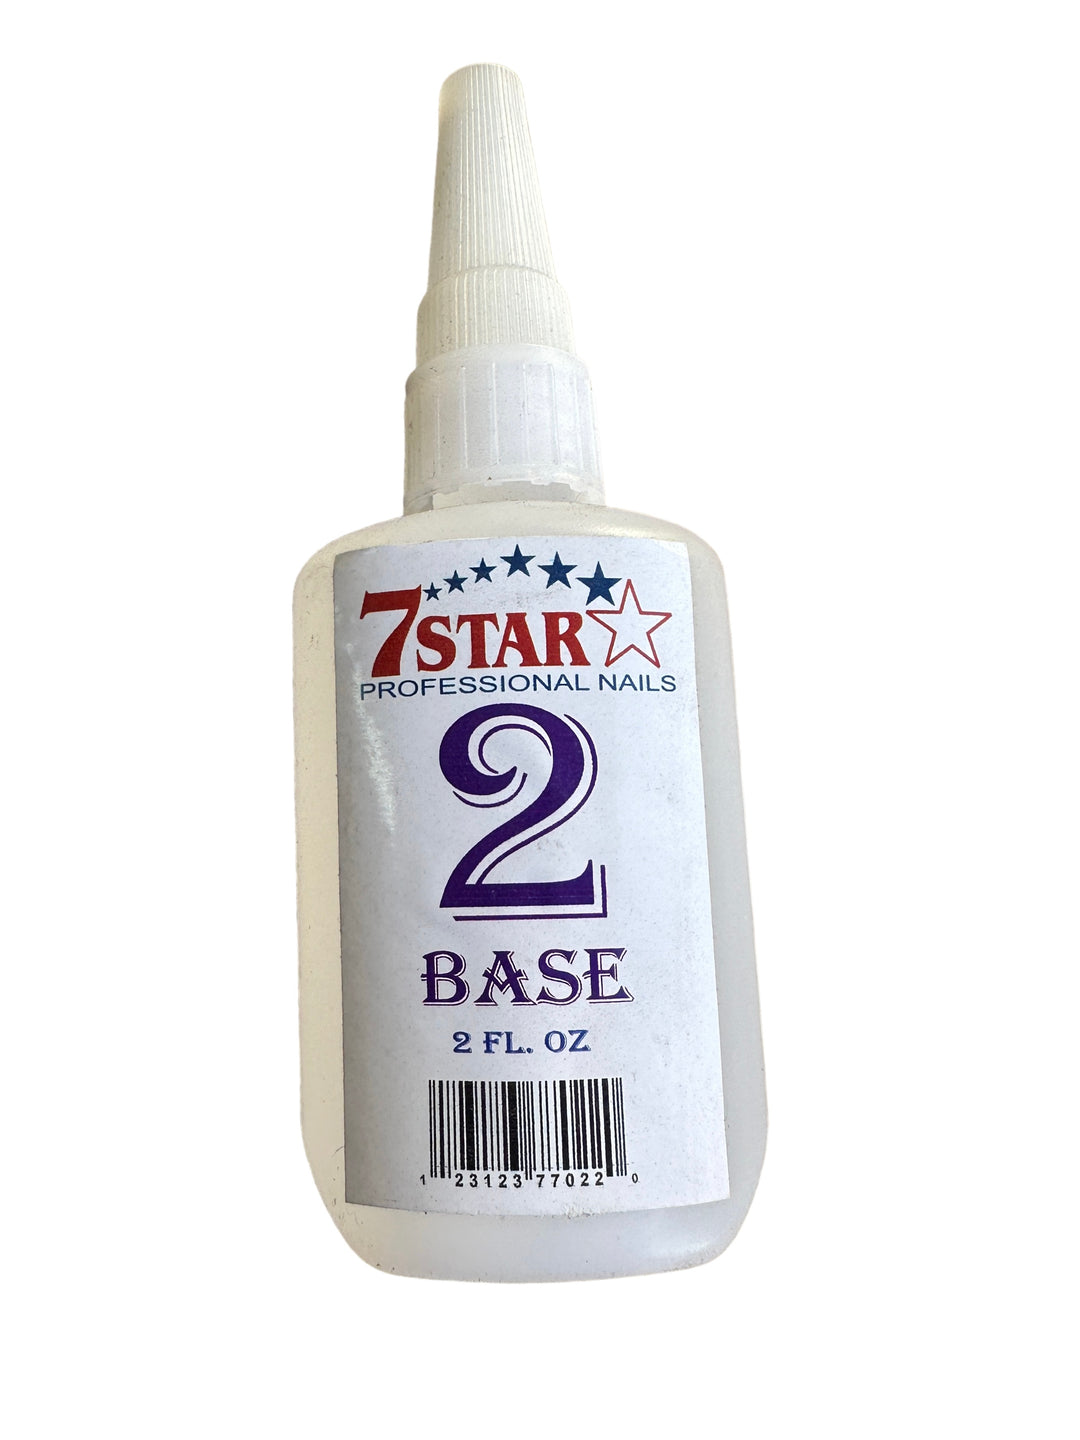 7 Star - Base (Step 2) - 2oz refill